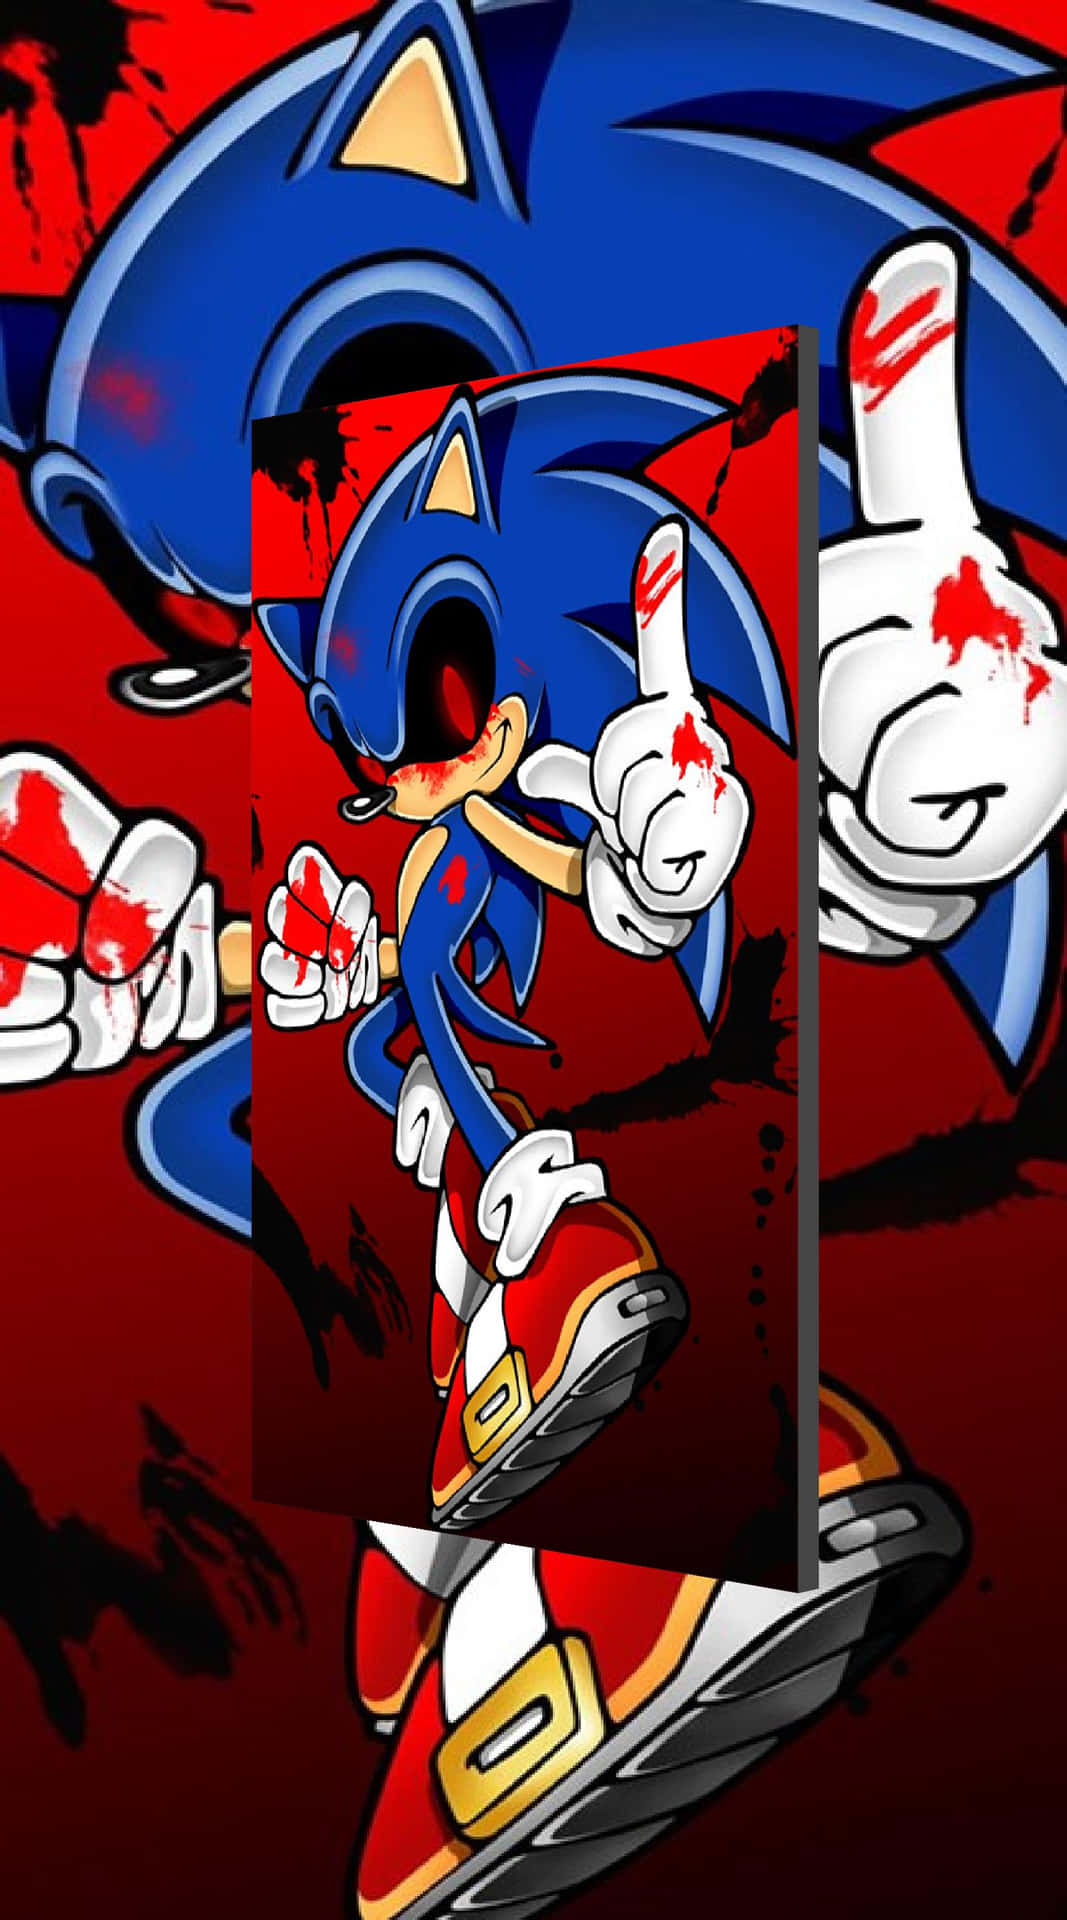 Download Sonic Exe - a creepypasta game where Sonic mutates into a